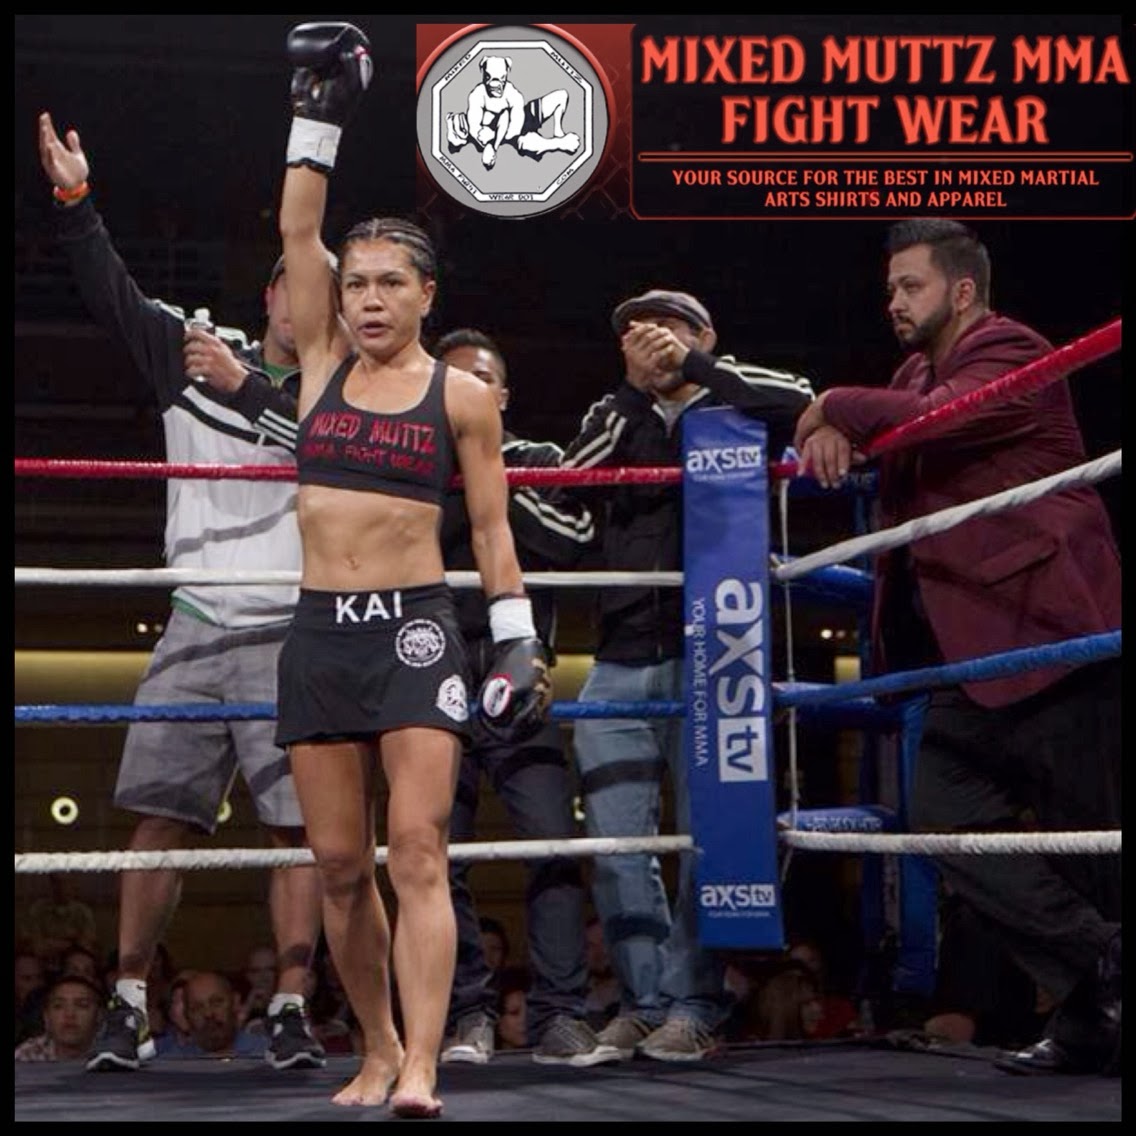 Mixed Muttz MMA Fight Wear